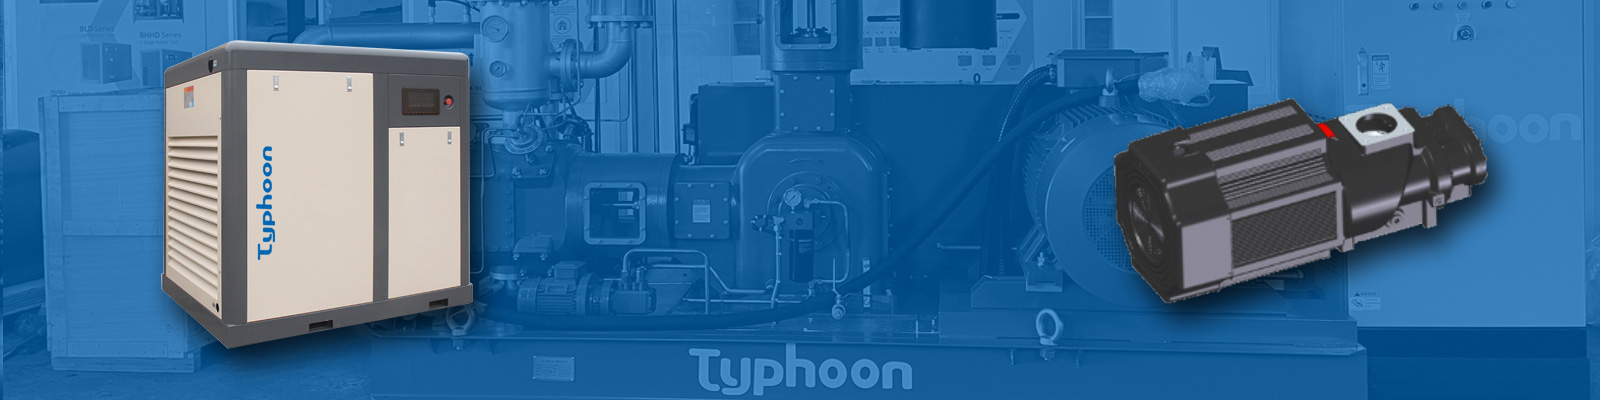 Typhoon Hight Pressure Oil free air compressor